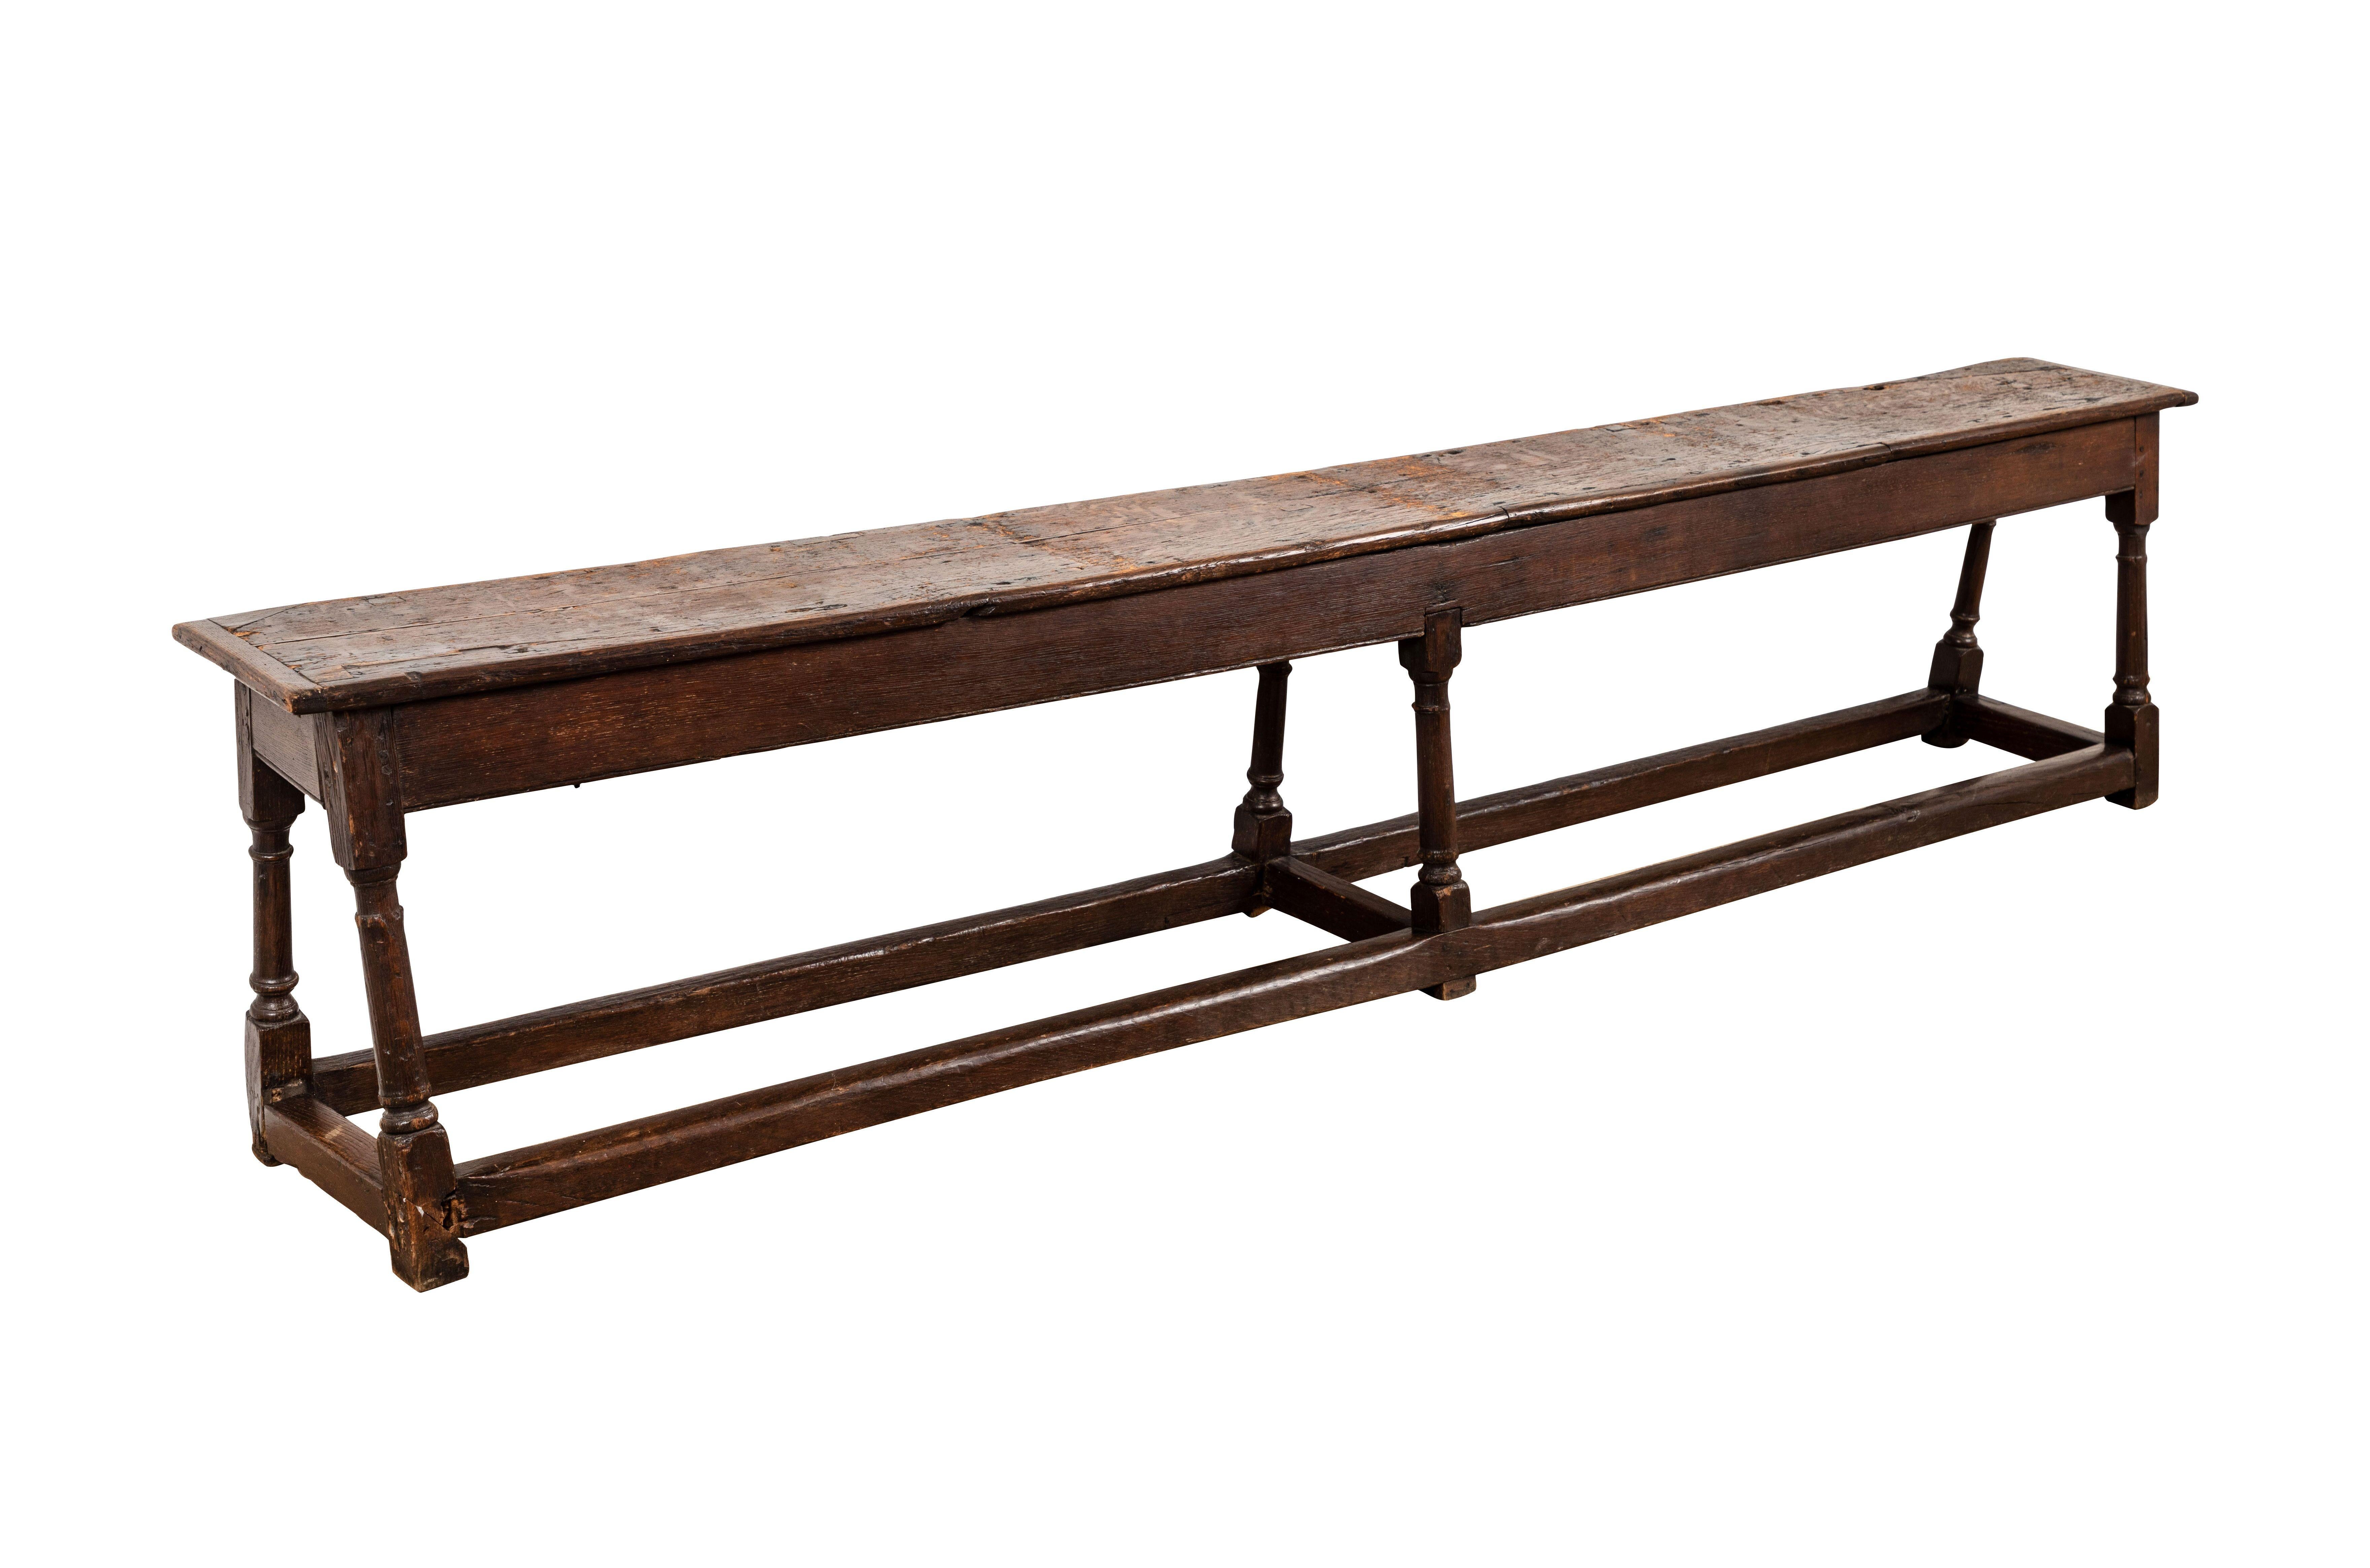 Antique 17th century wooden bench, English
Measures: 88” L x 10” D x 19” H.
   